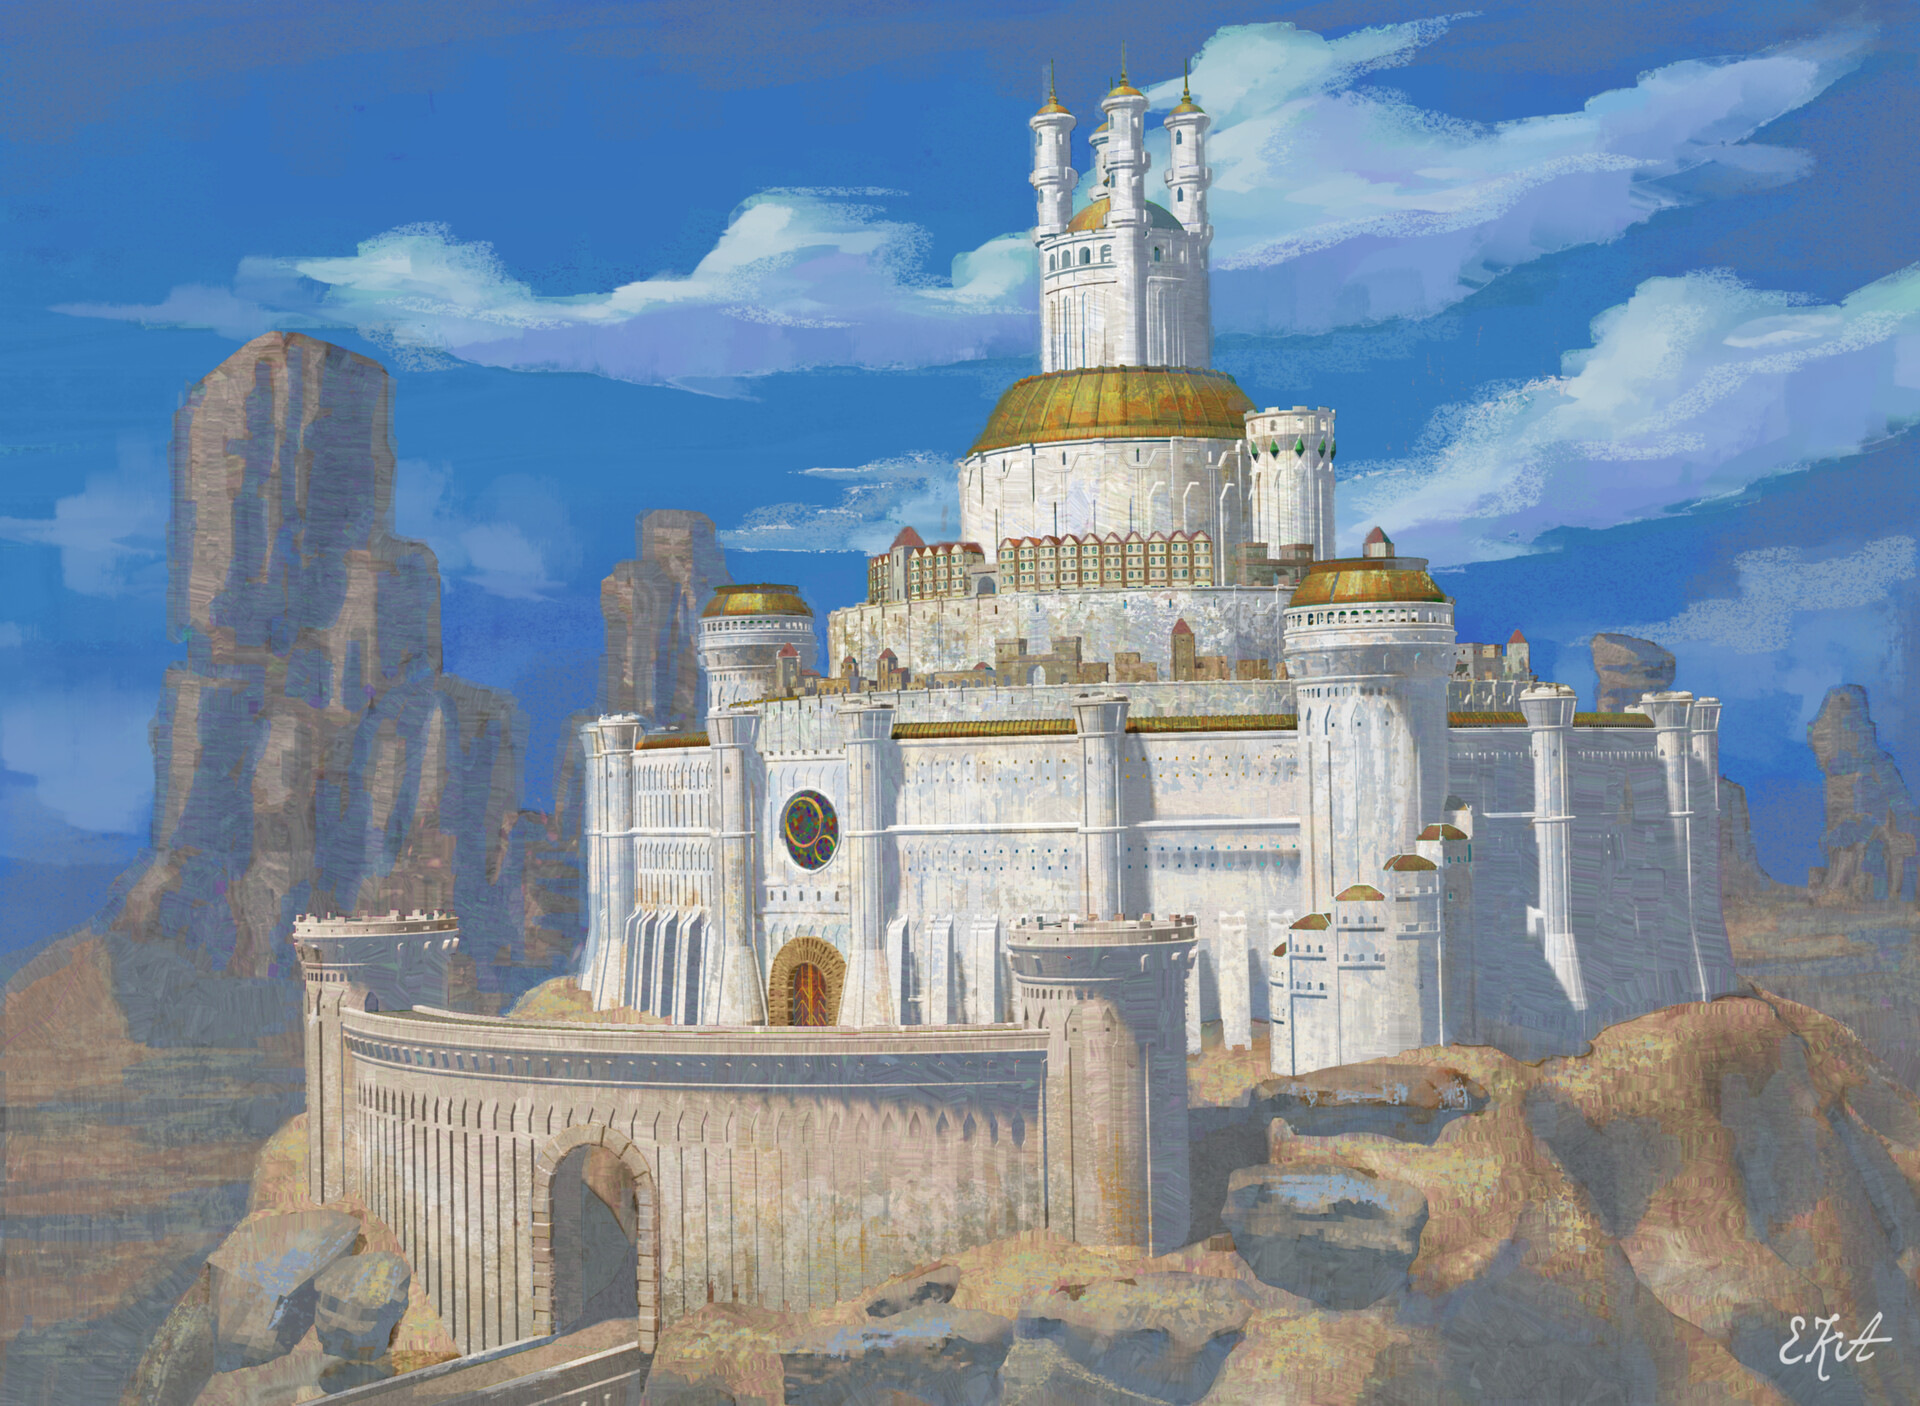 fantasy desert palace